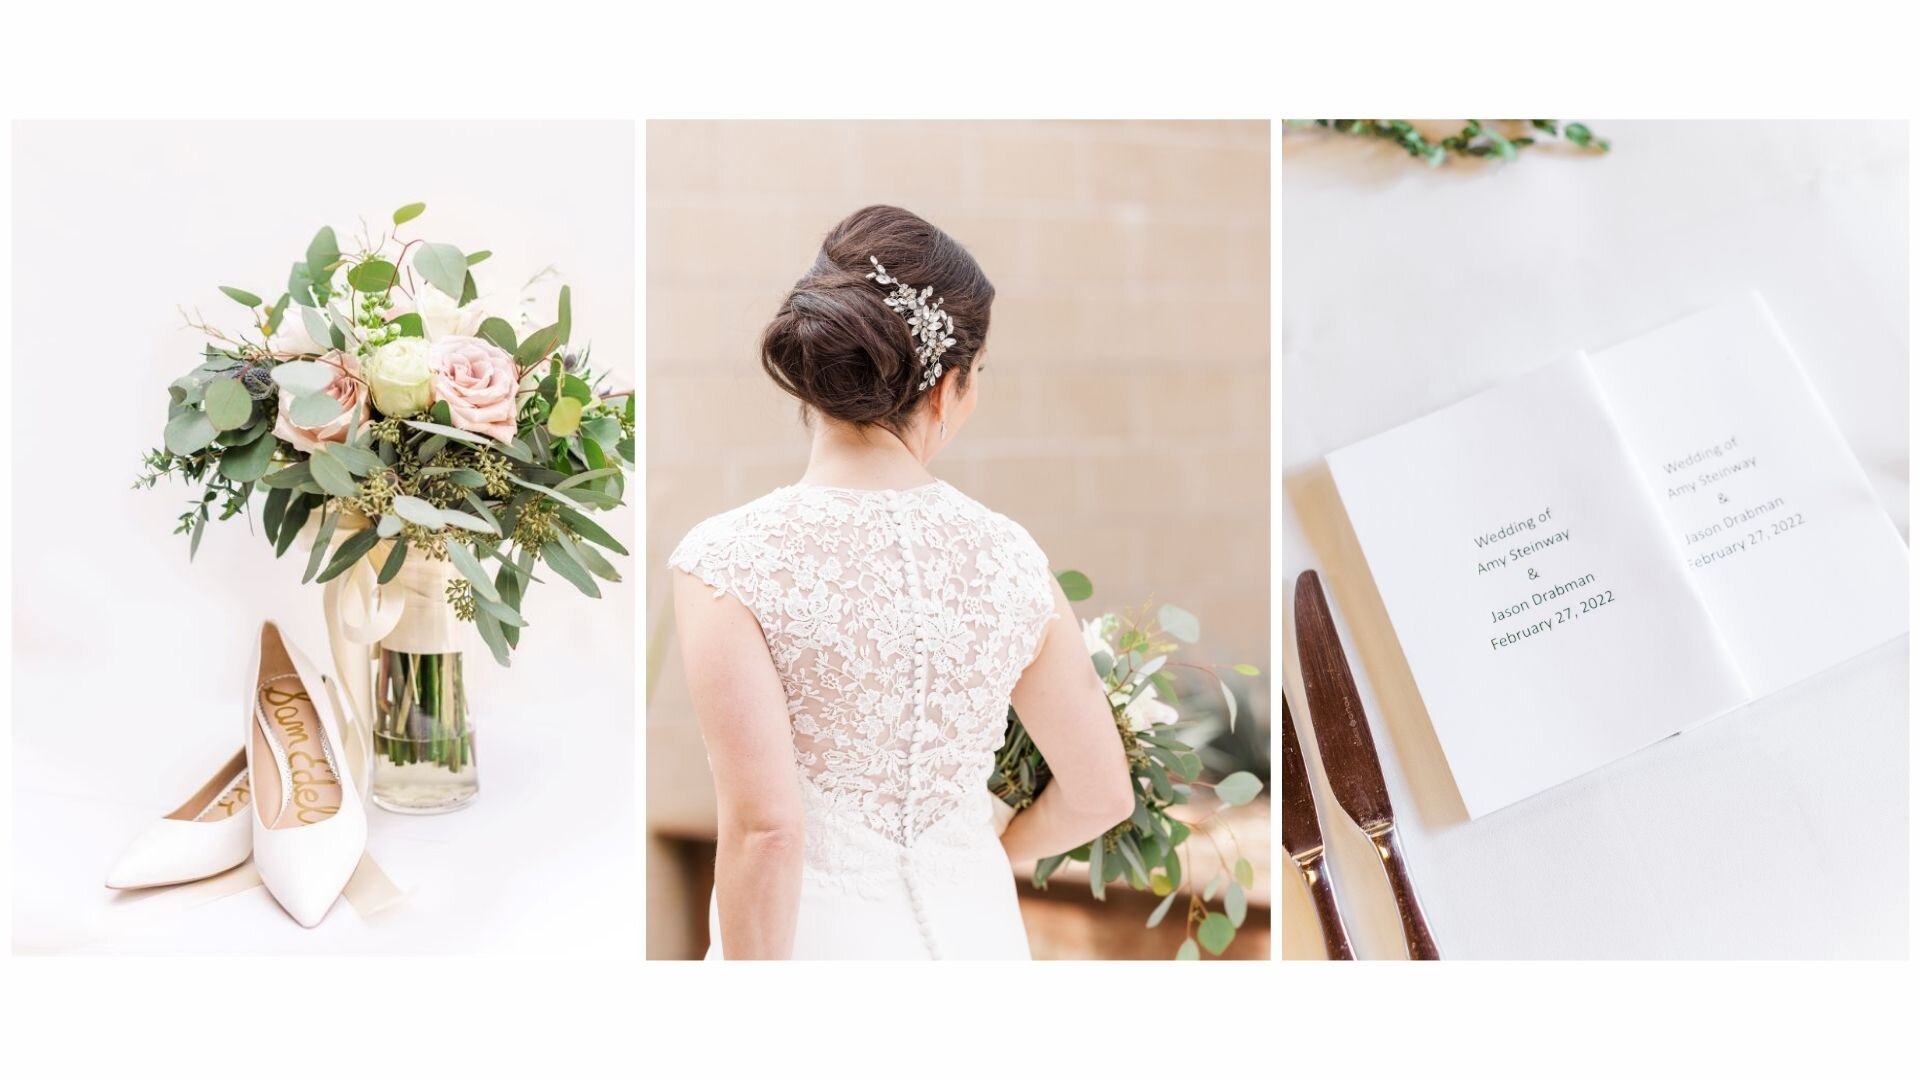 Three photos of wedding details